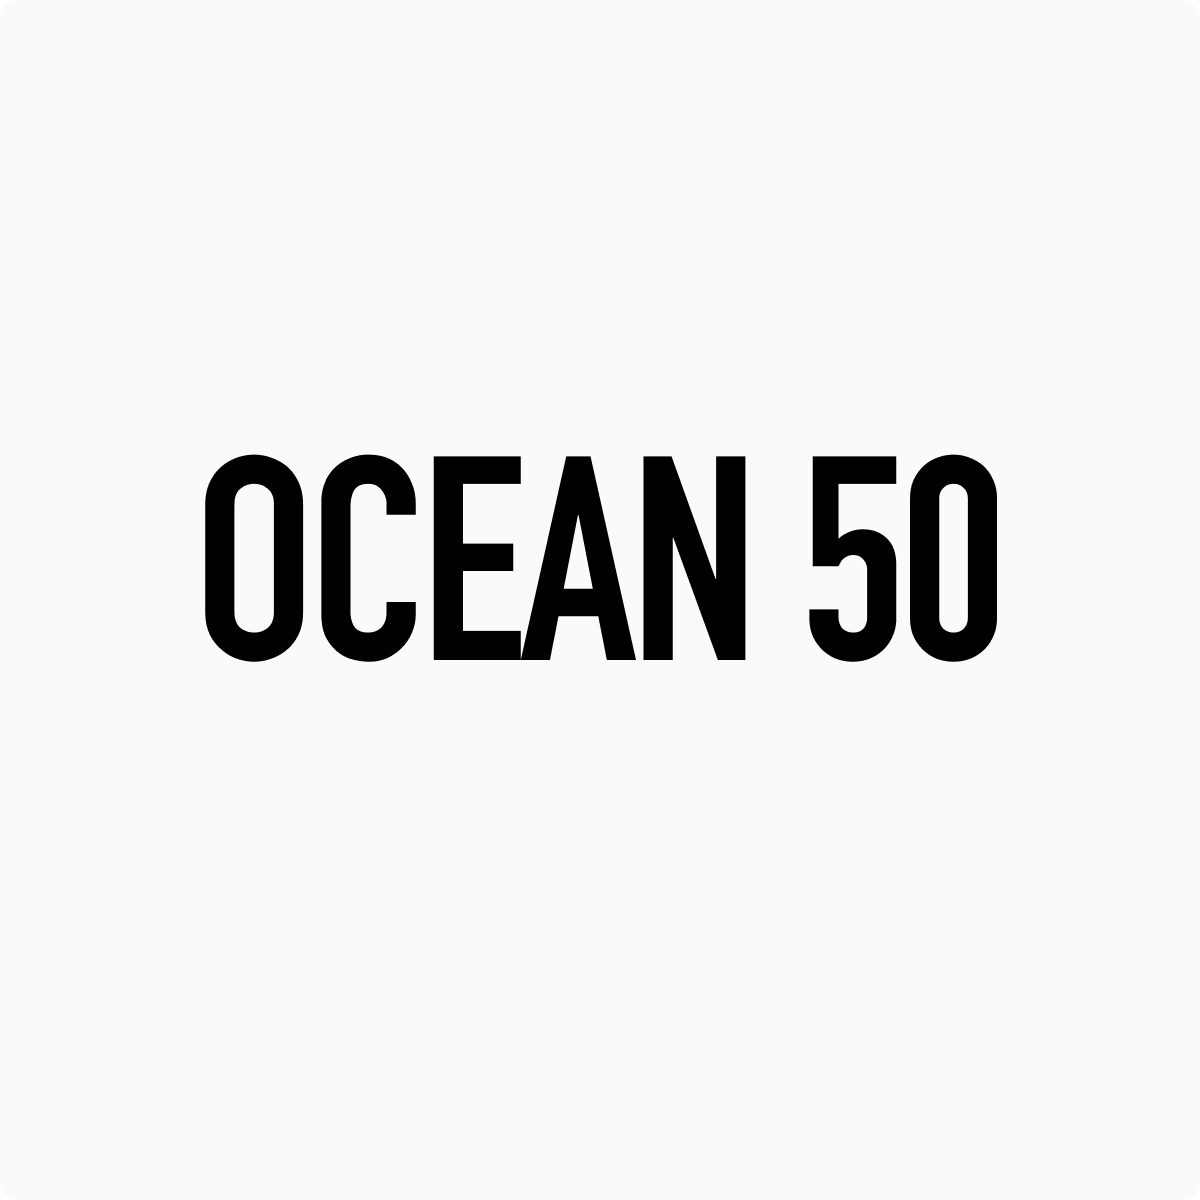 Ocean 50